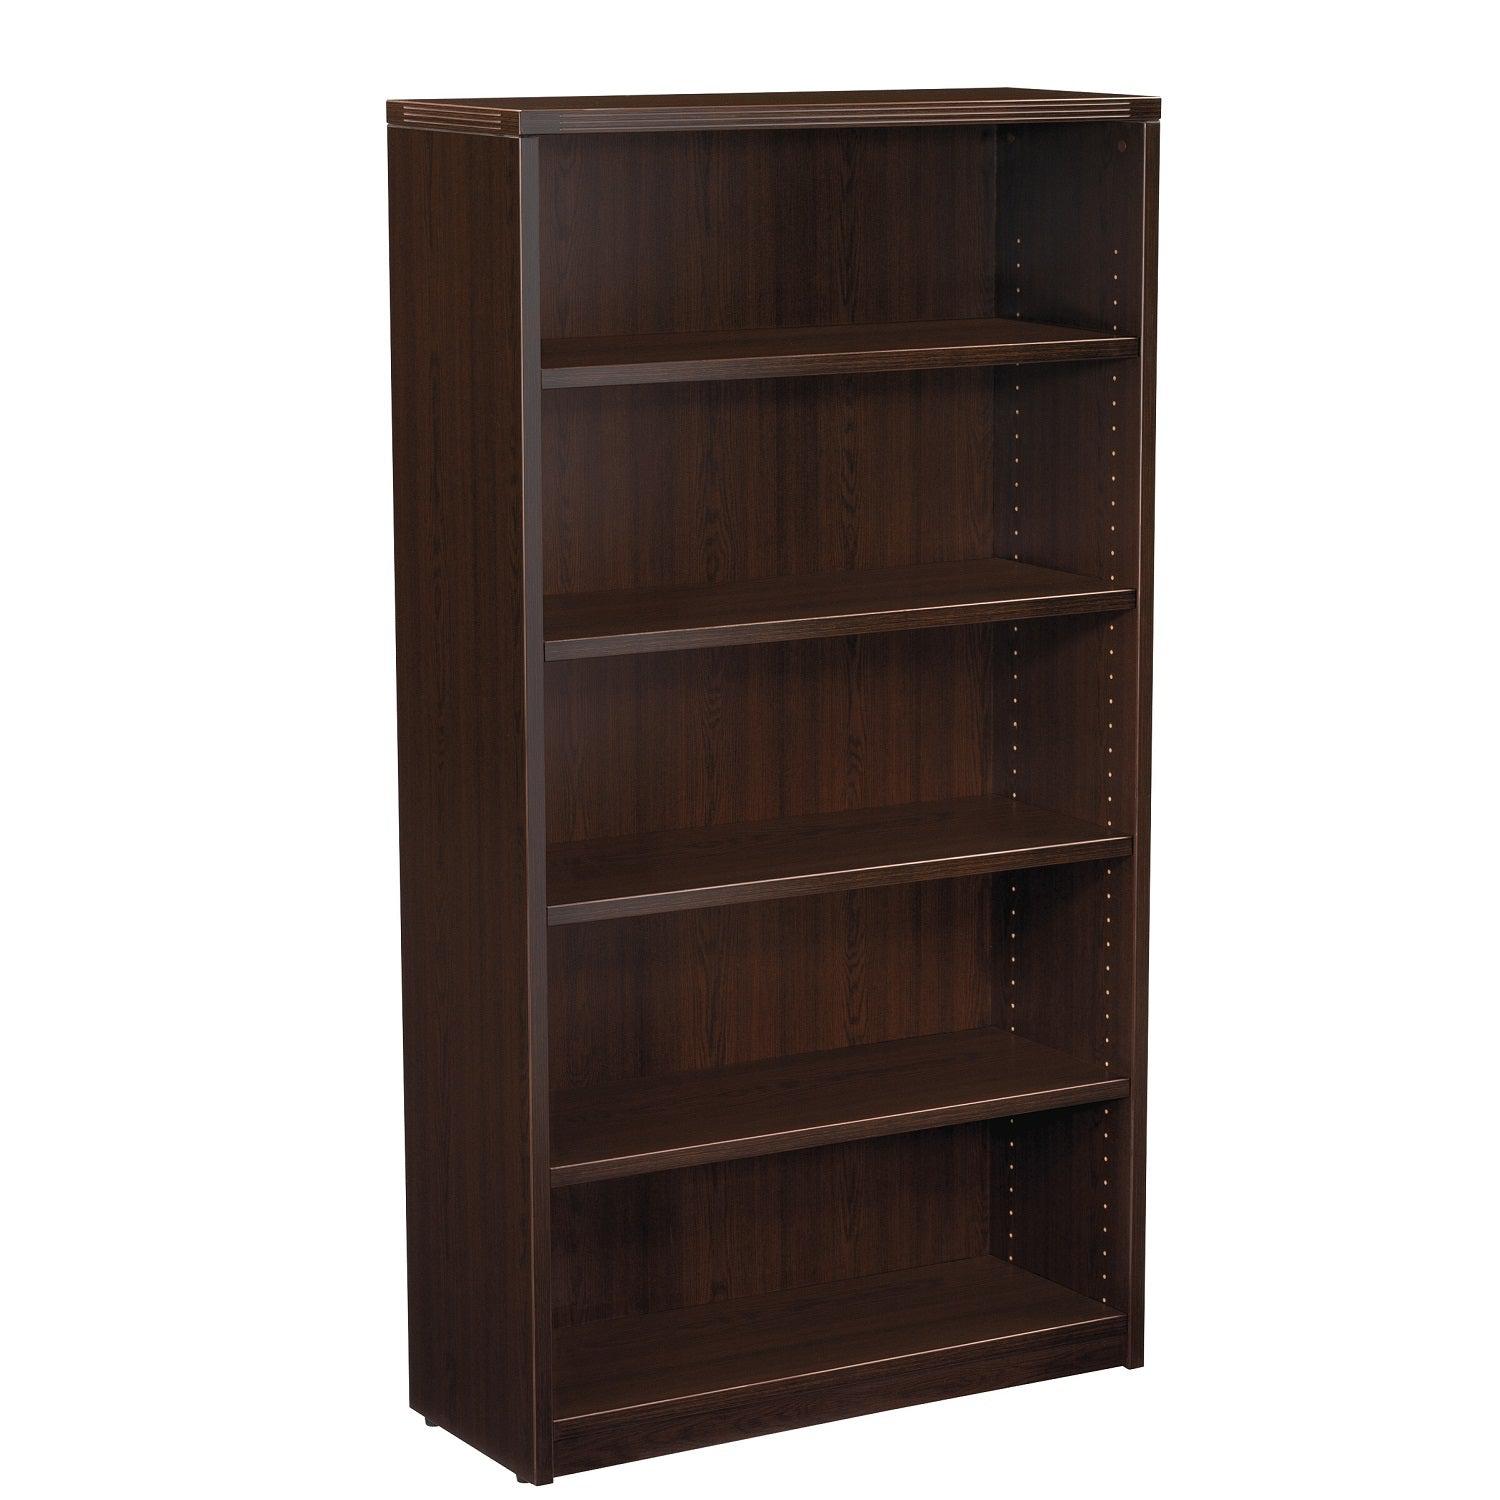 Napa 5-Shelf Bookcase, 36" x 14" x 65" H